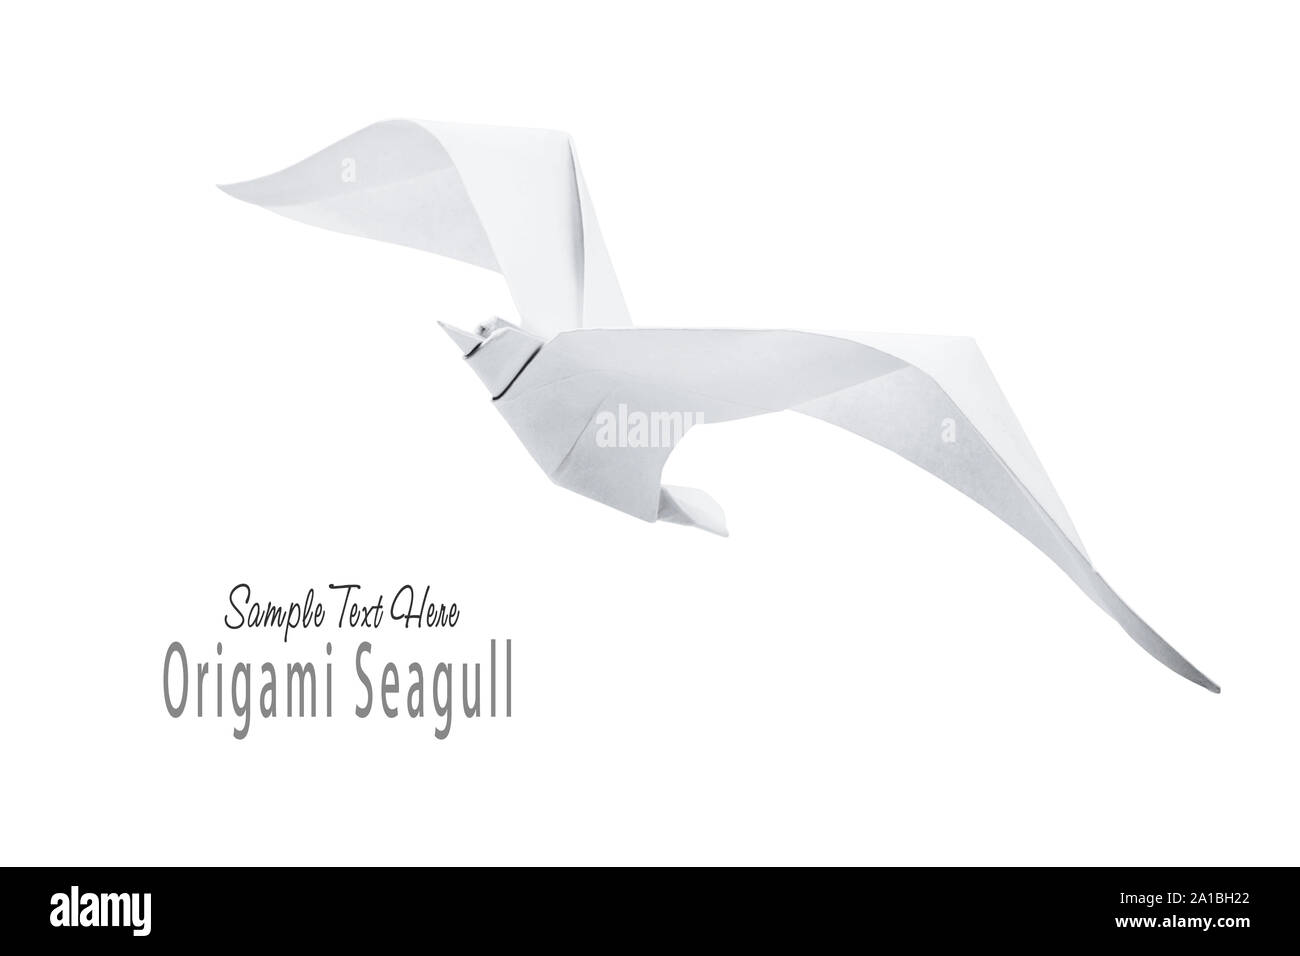 Papel de Origami de aves gaviota Fotografía de stock - Alamy